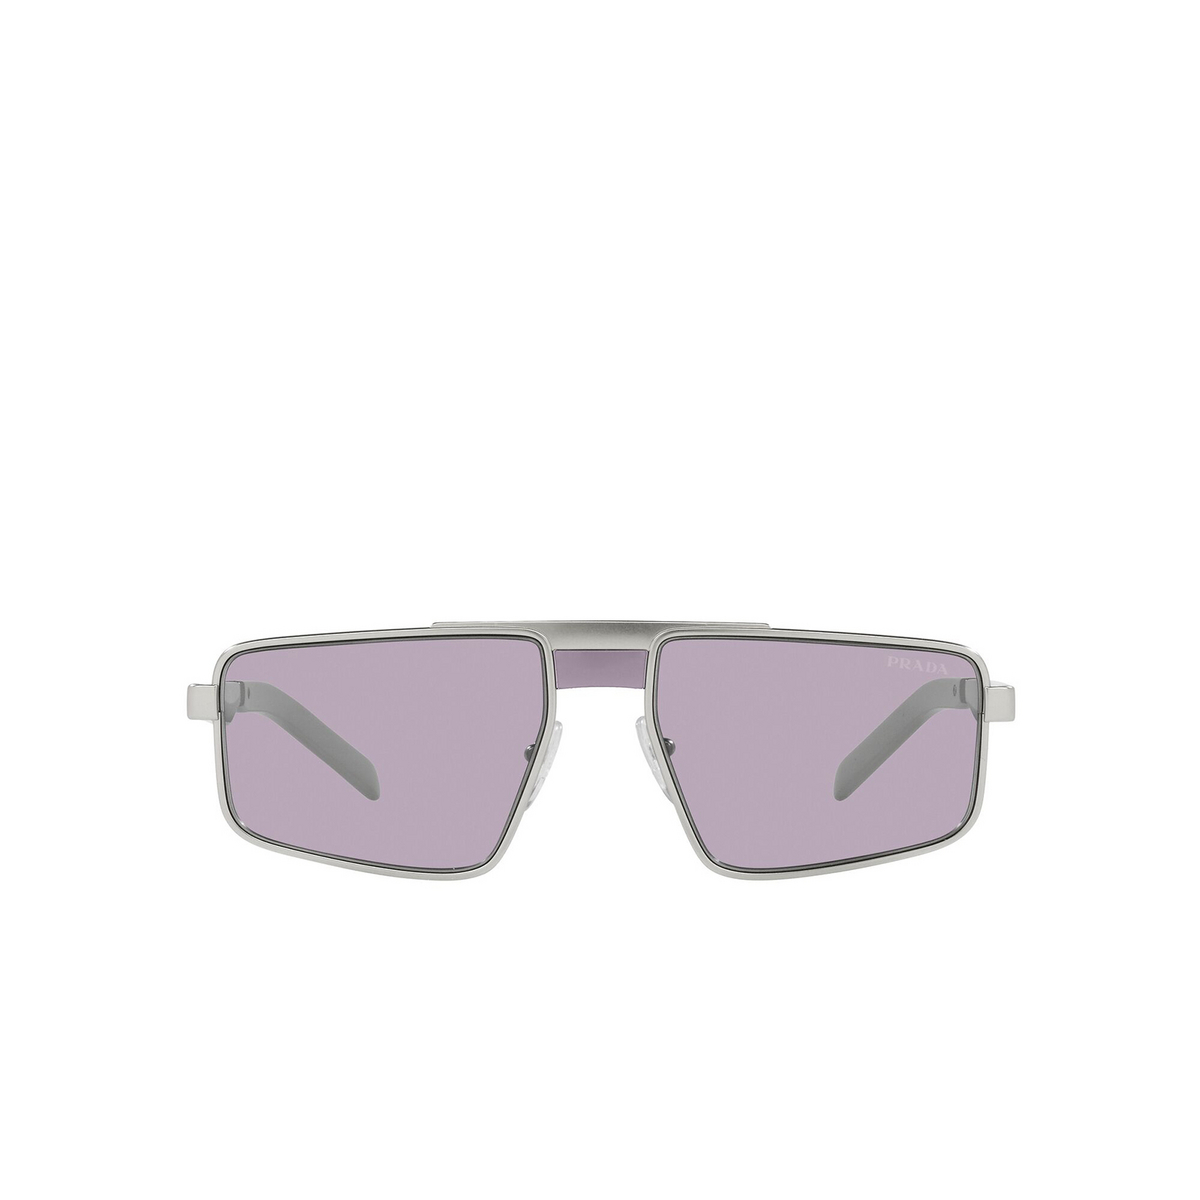 Prada® Irregular Sunglasses: PR 61WS color Matte Silver VAE09M - front view.